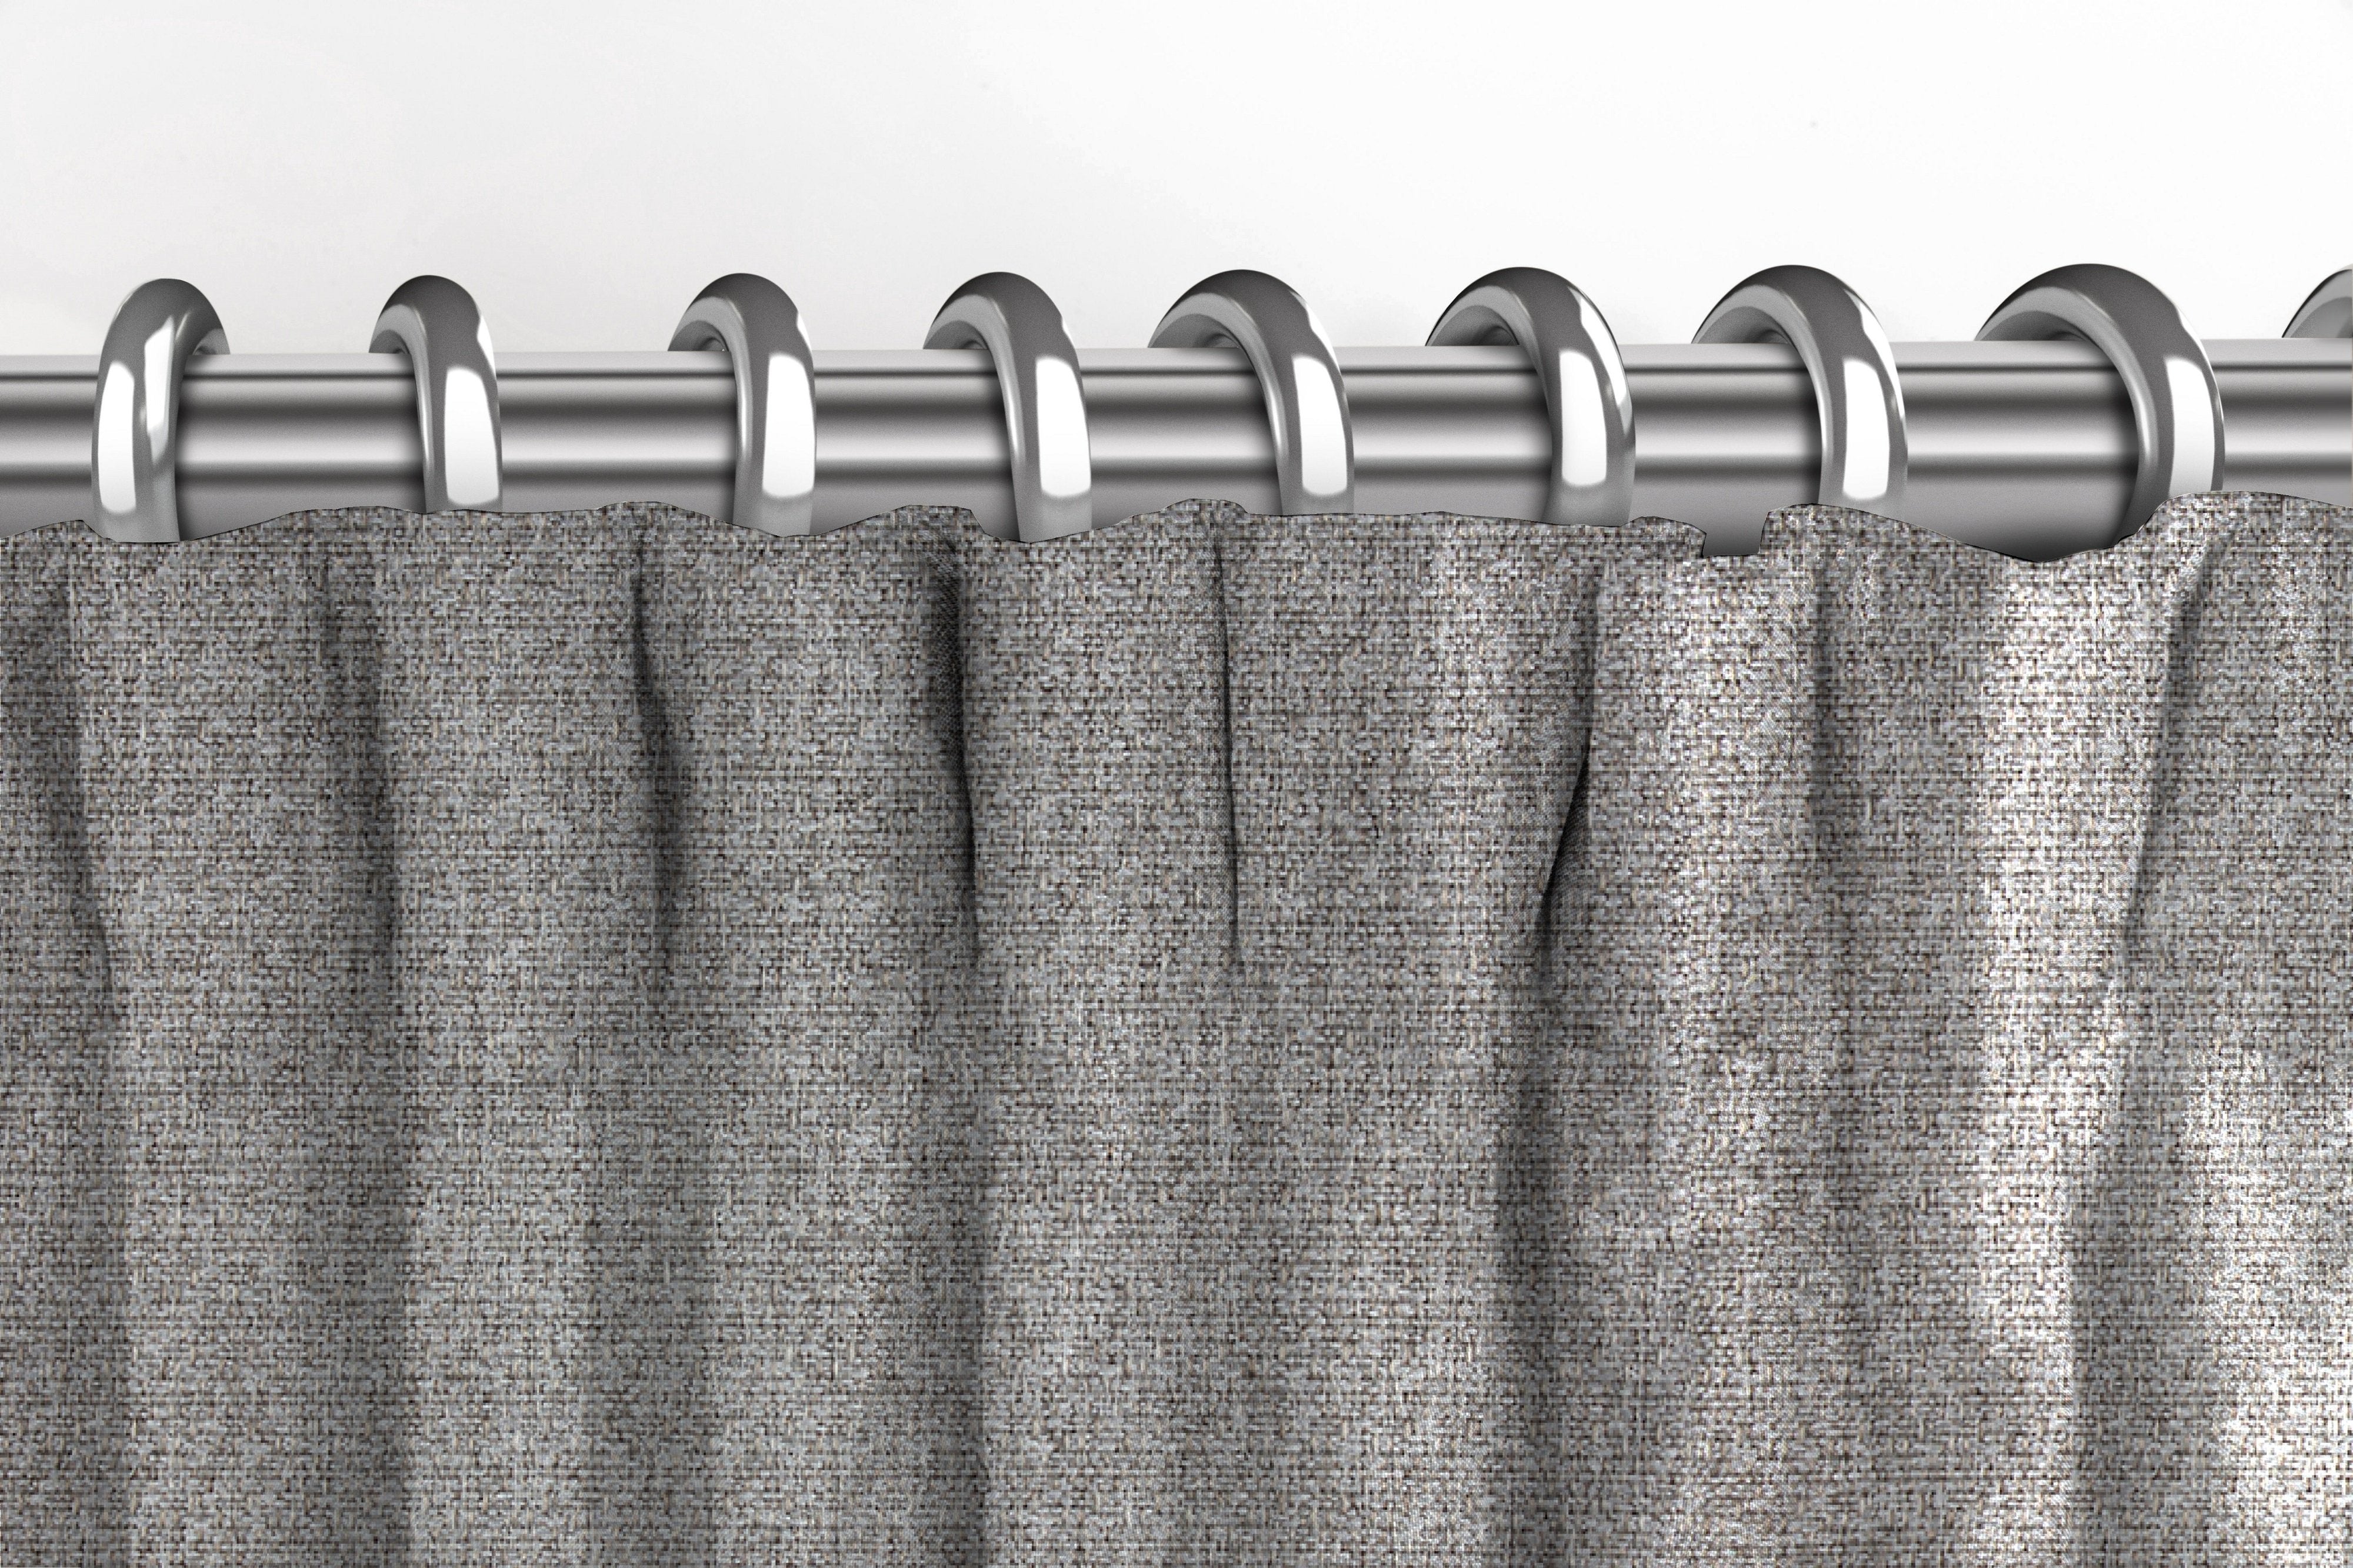 McAlister Textiles Highlands Textured Plain Soft Grey Curtains Tailored Curtains 